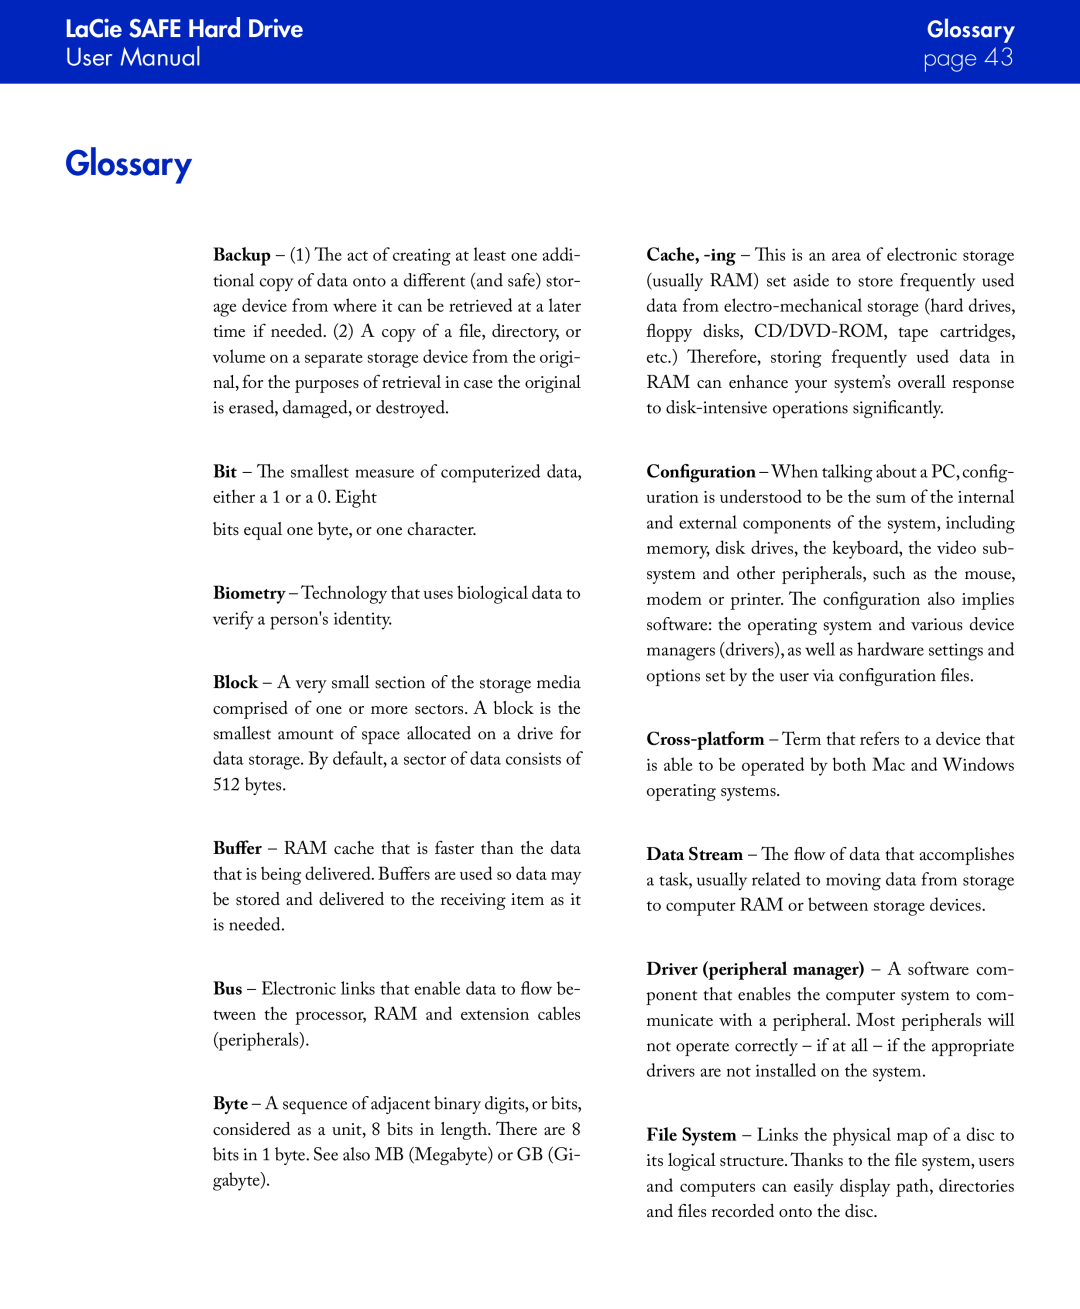 LaCie manual Glossary, LaCie SAFE Hard Drive, User Manual, page 